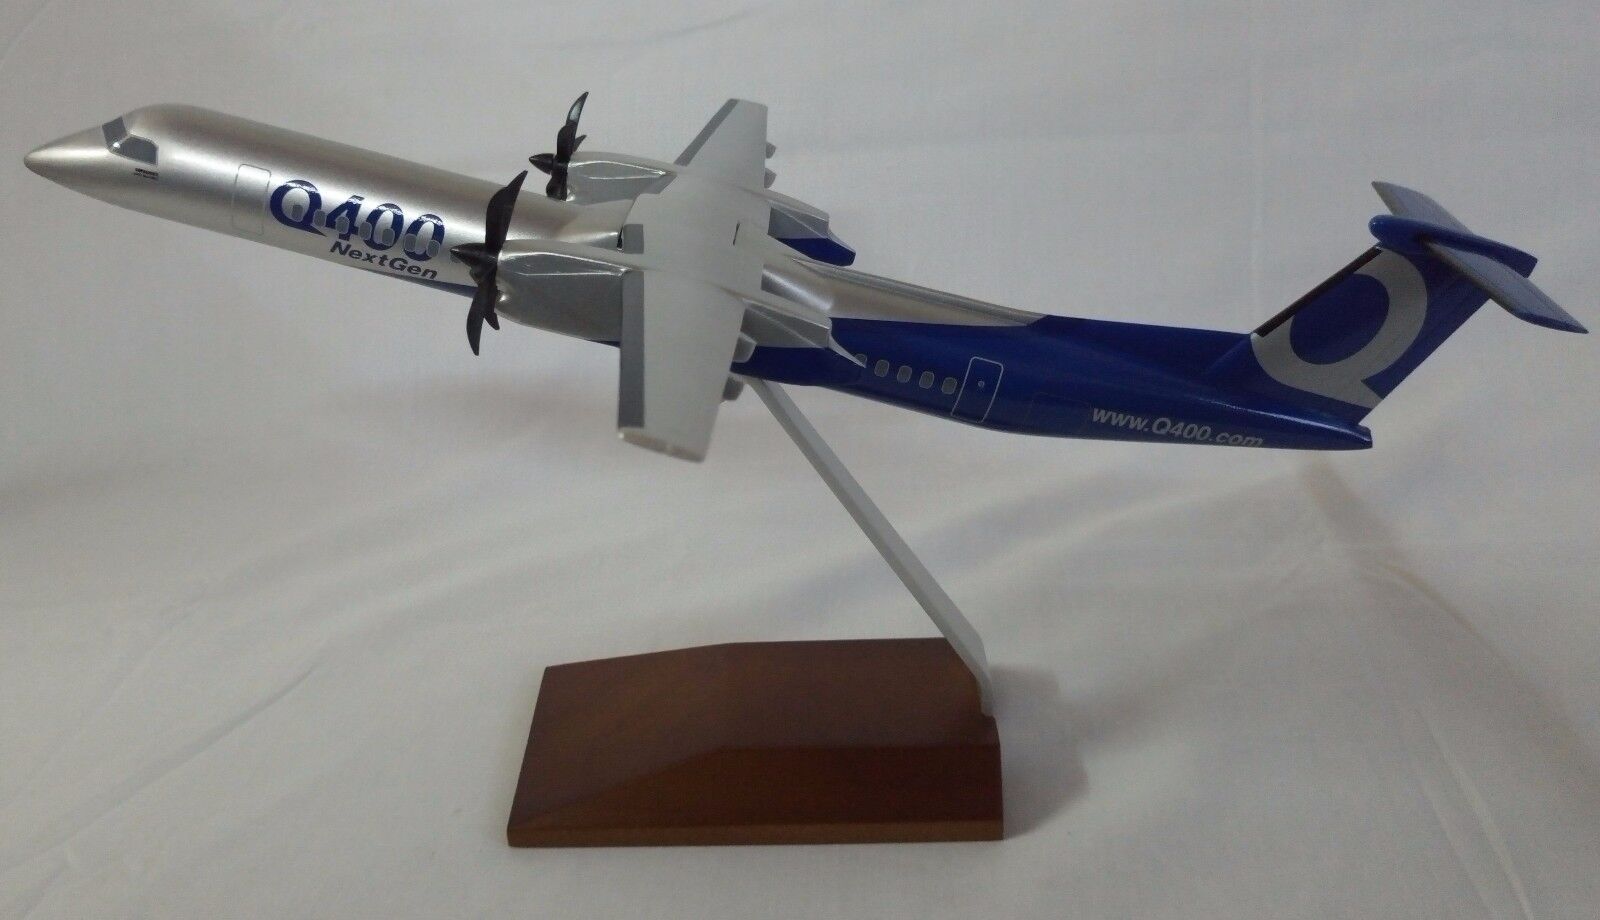 Skymarks Bombardier Q400 NextGen Scale 1:100 Aircraft Desk Display Model